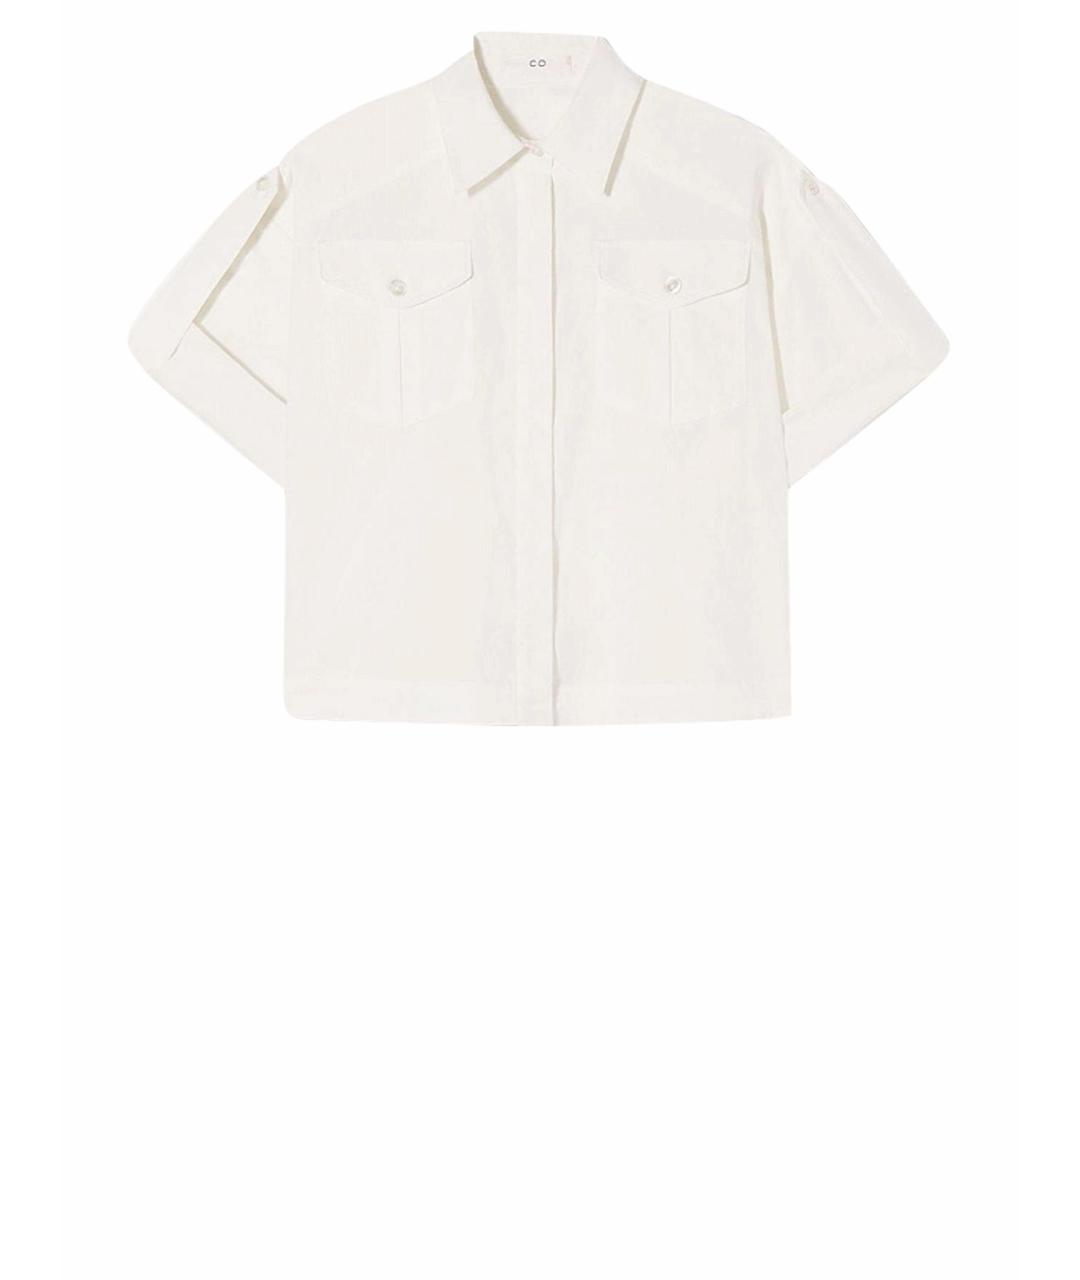 CO Белая хлопковая рубашка, фото 1